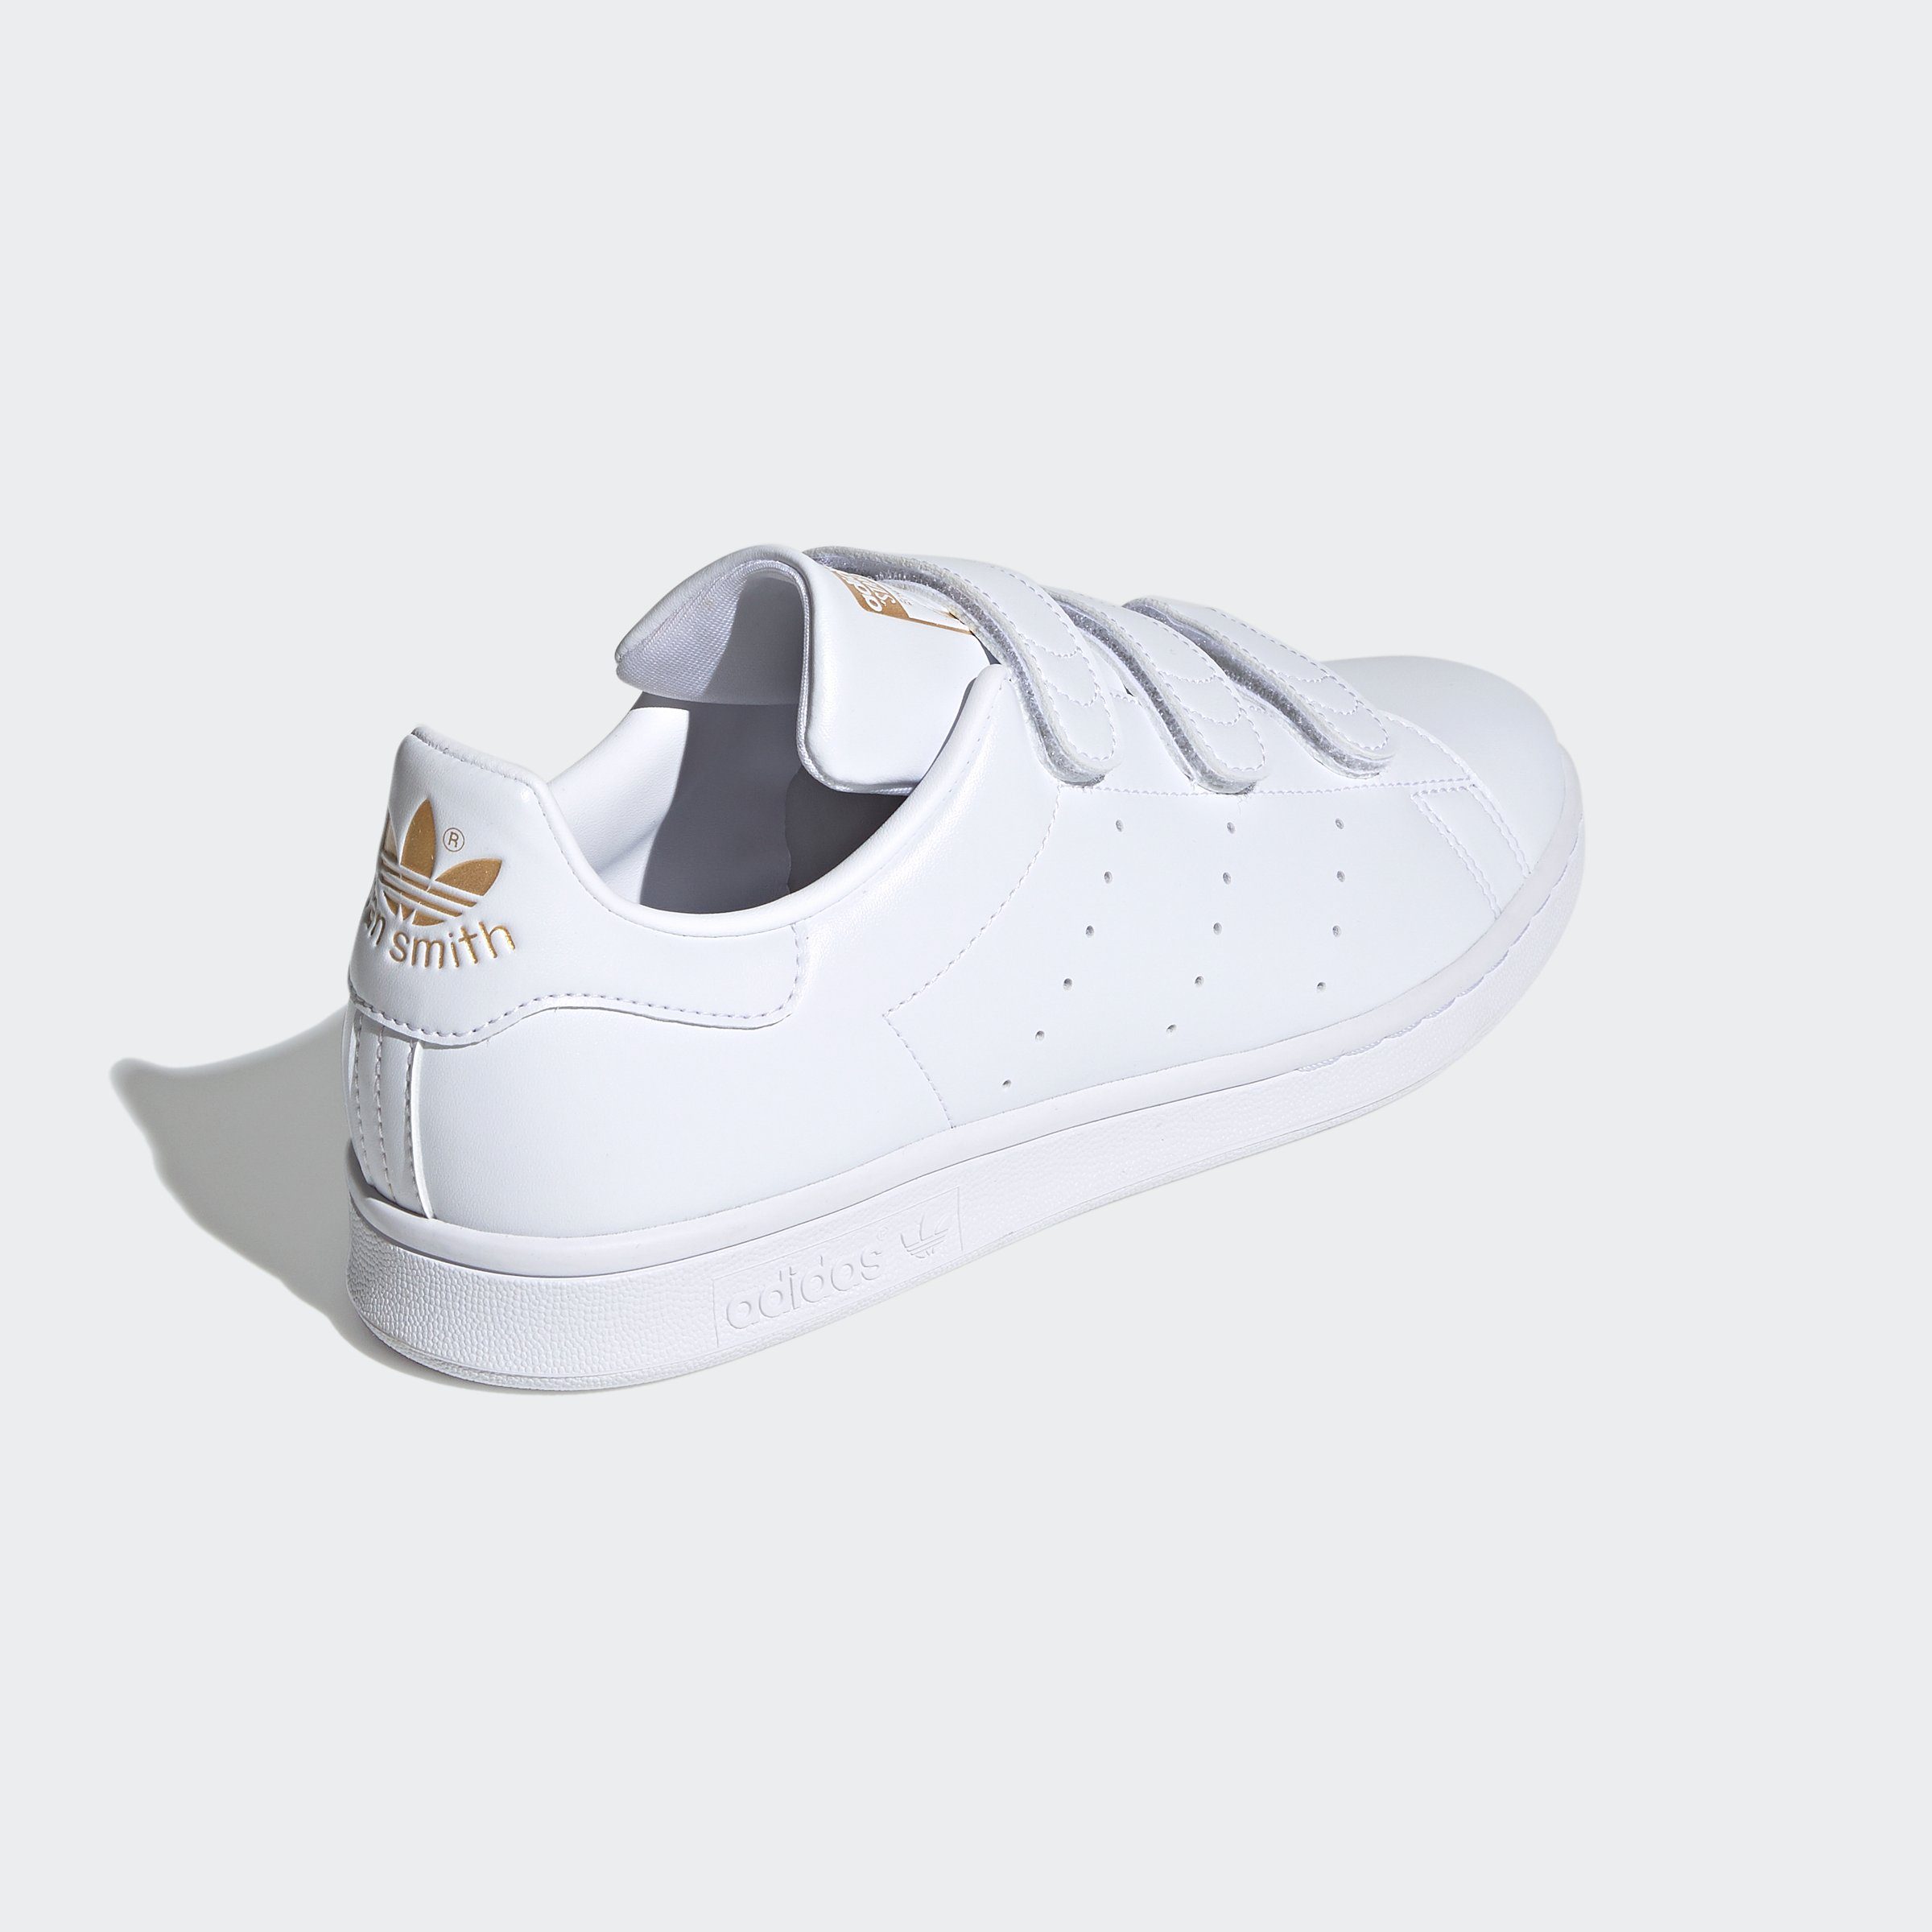 / White / Sneaker adidas SMITH White Cloud Cloud STAN Metallic Originals Gold